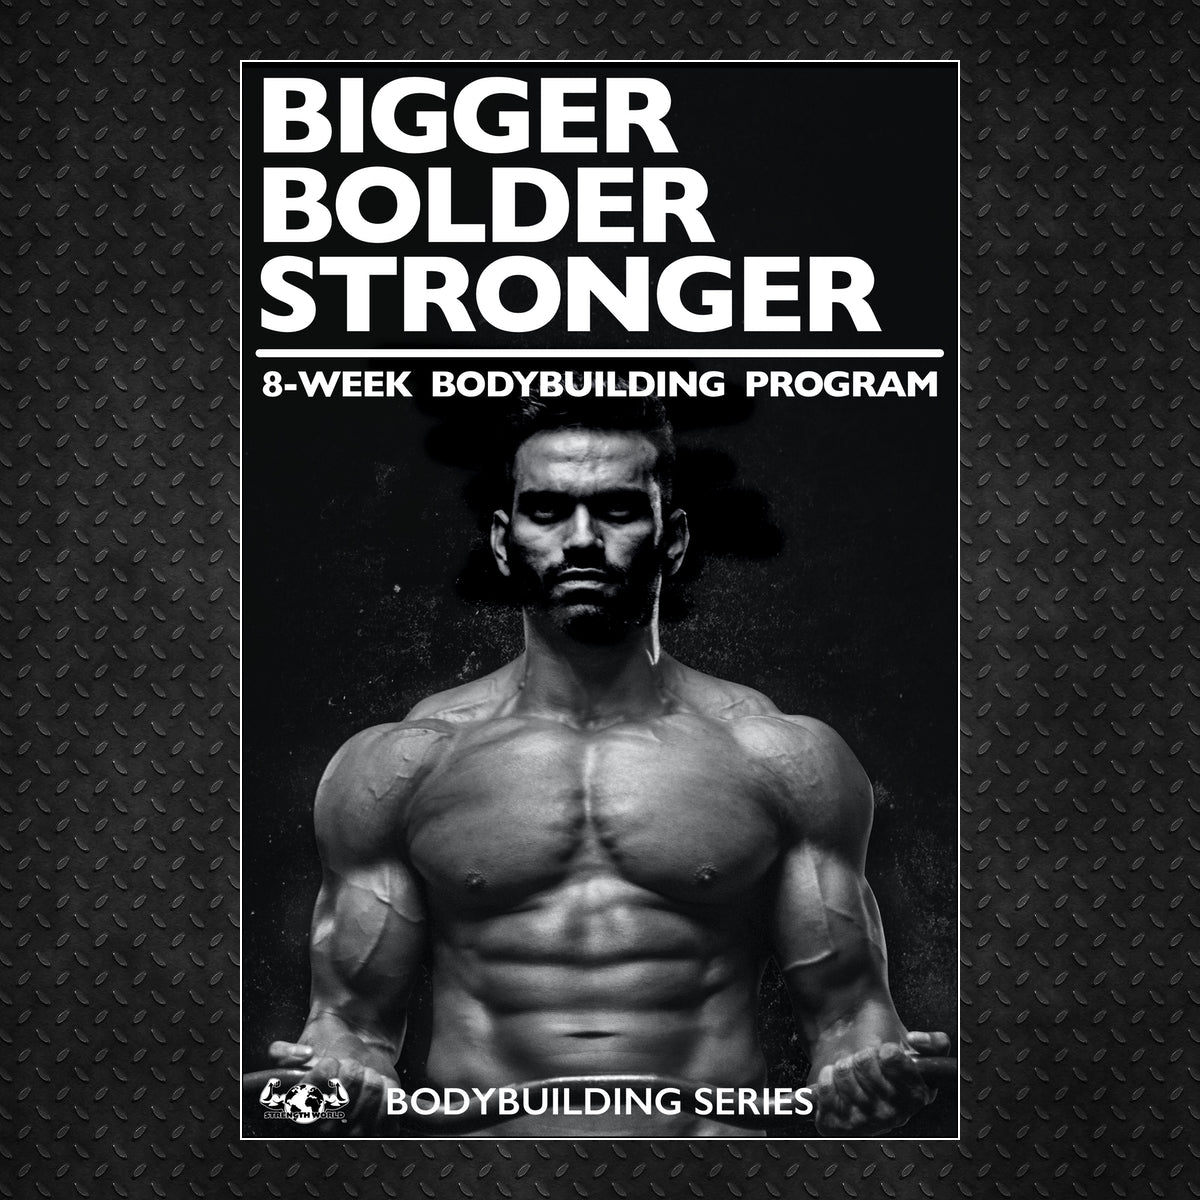 Bigger Bolder Stronger Bodybuilding Program Ad 1